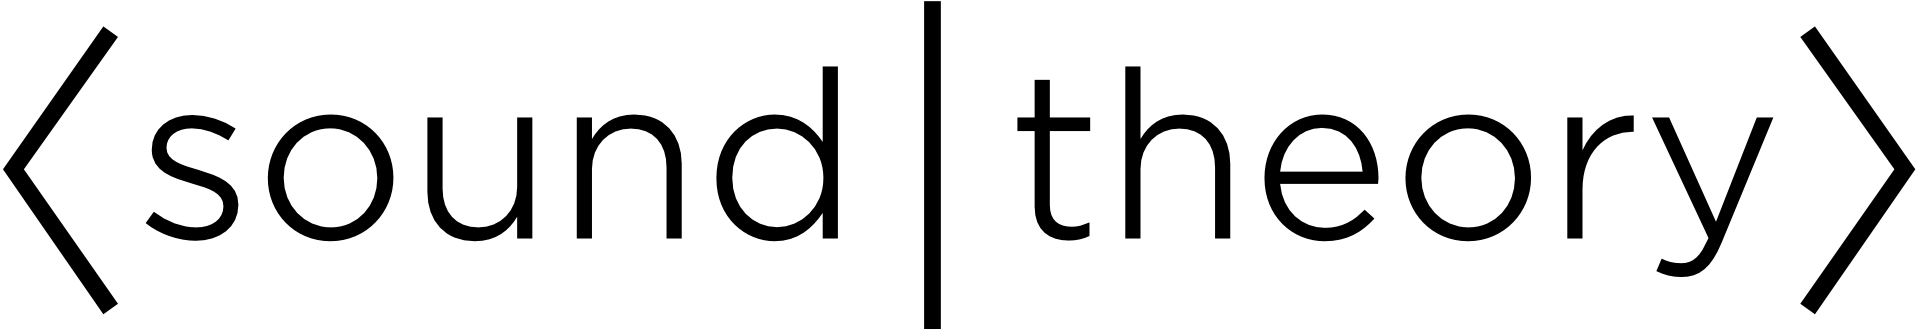 Soundtheory-logo